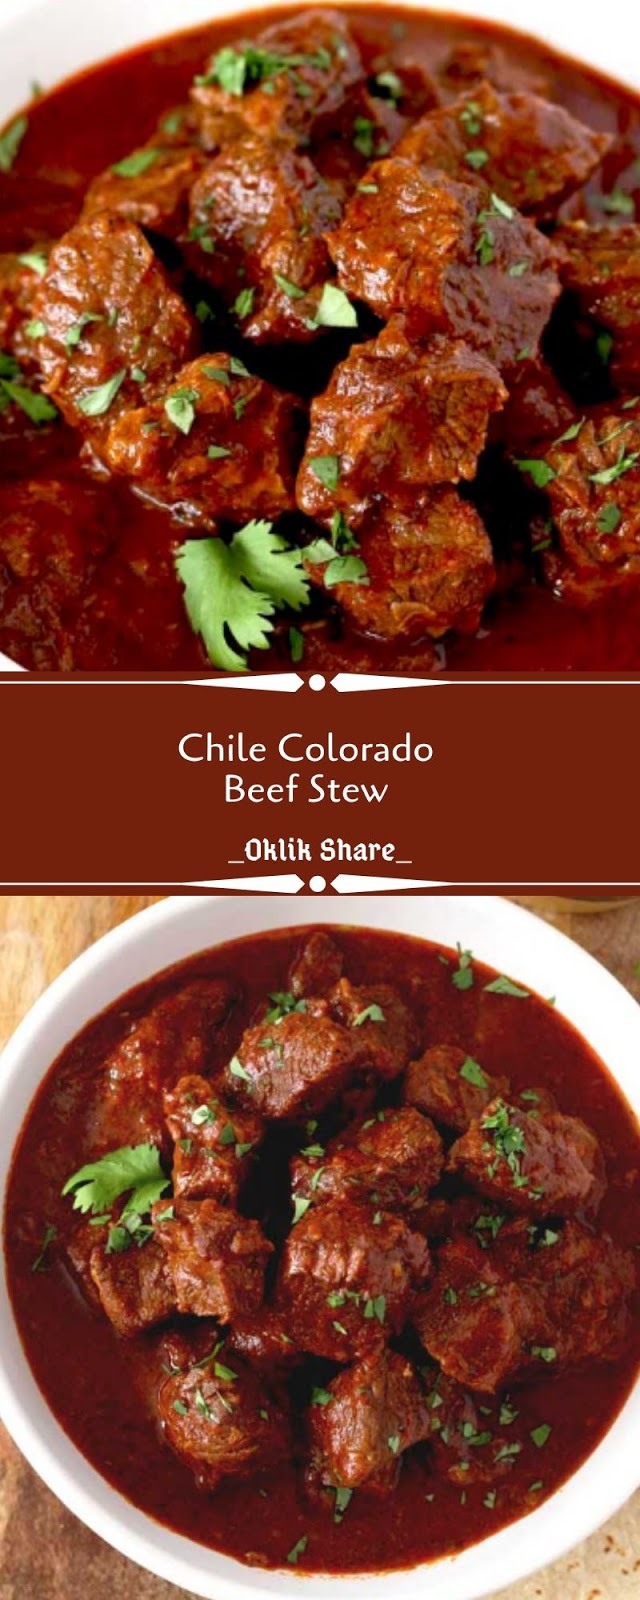 Chile Colorado Beef Stew